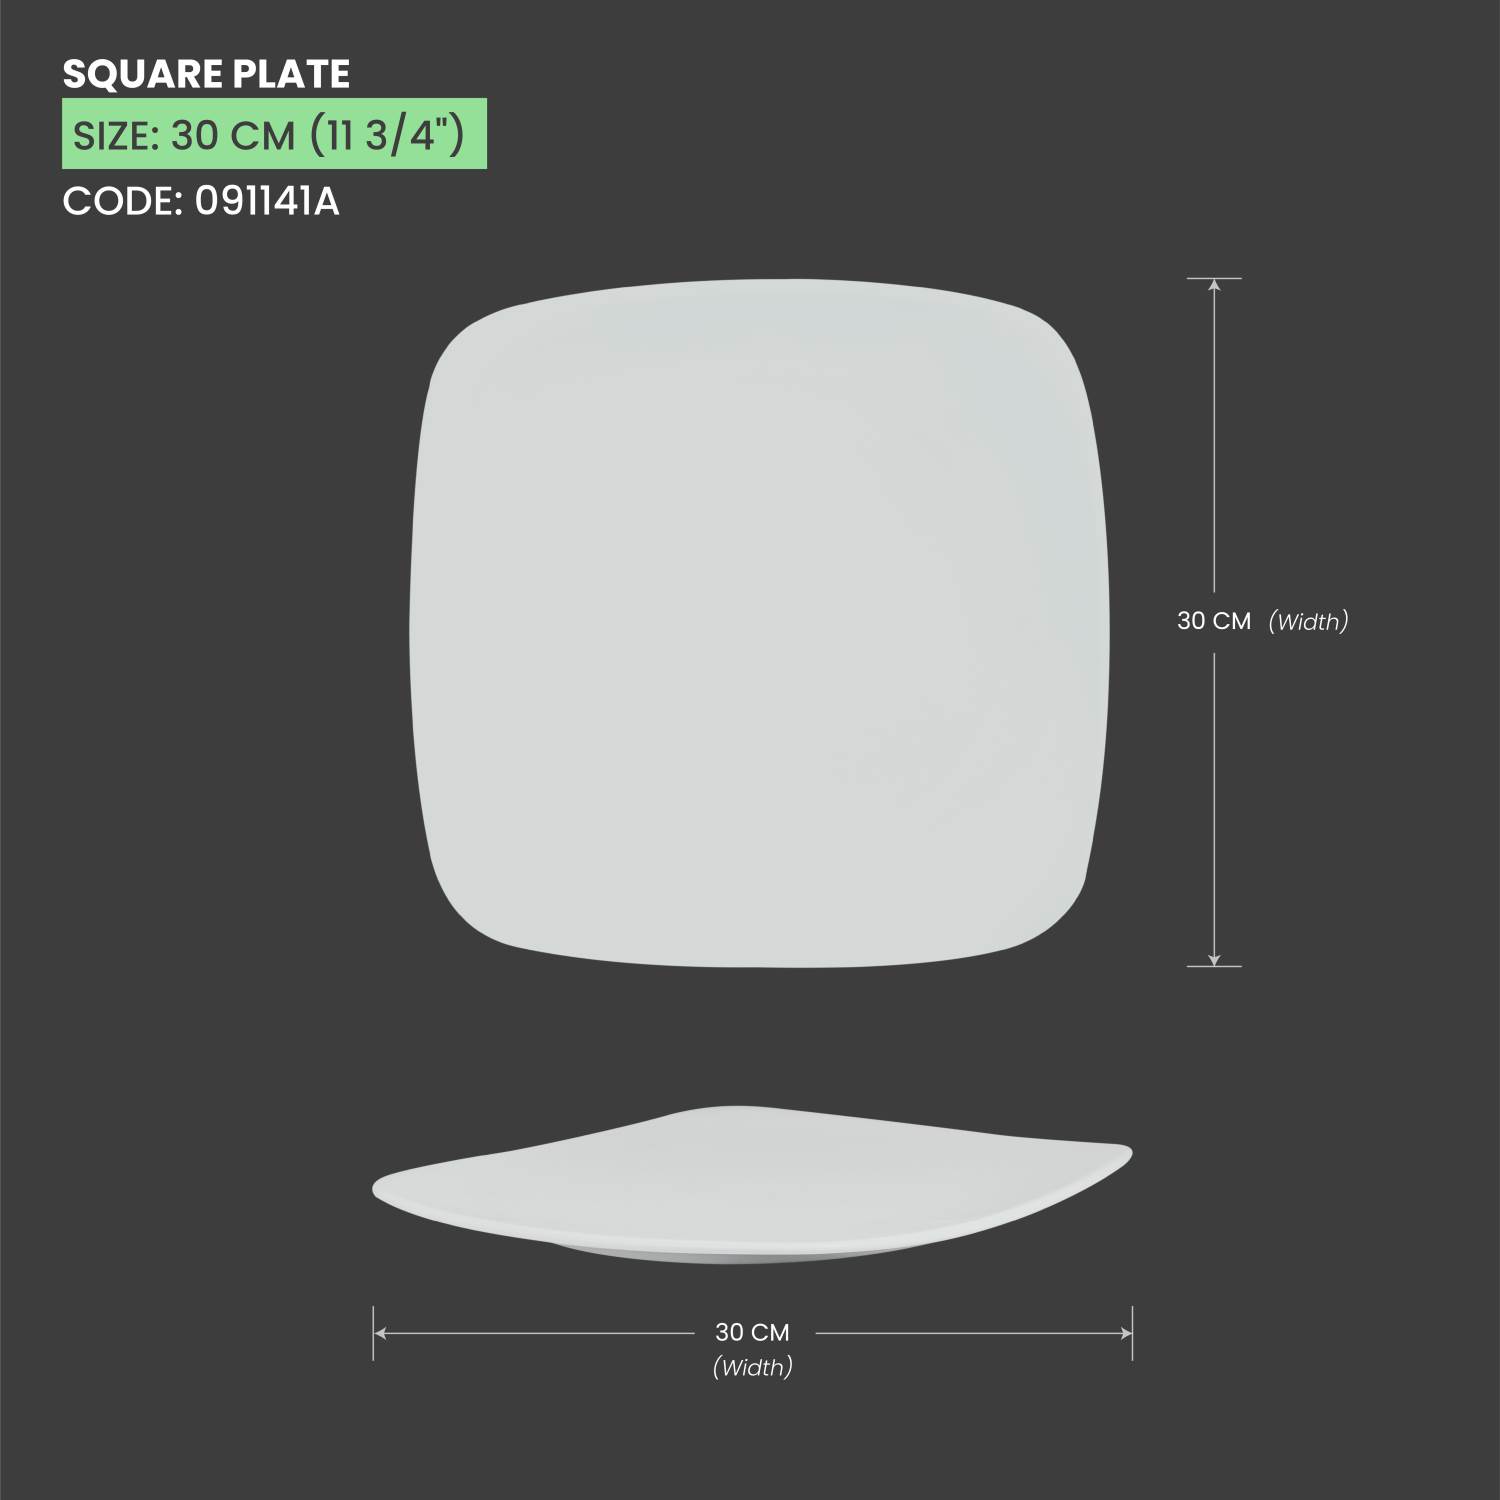 Baralee Simple Plus Square Plate 30 Cm (11 3/4")